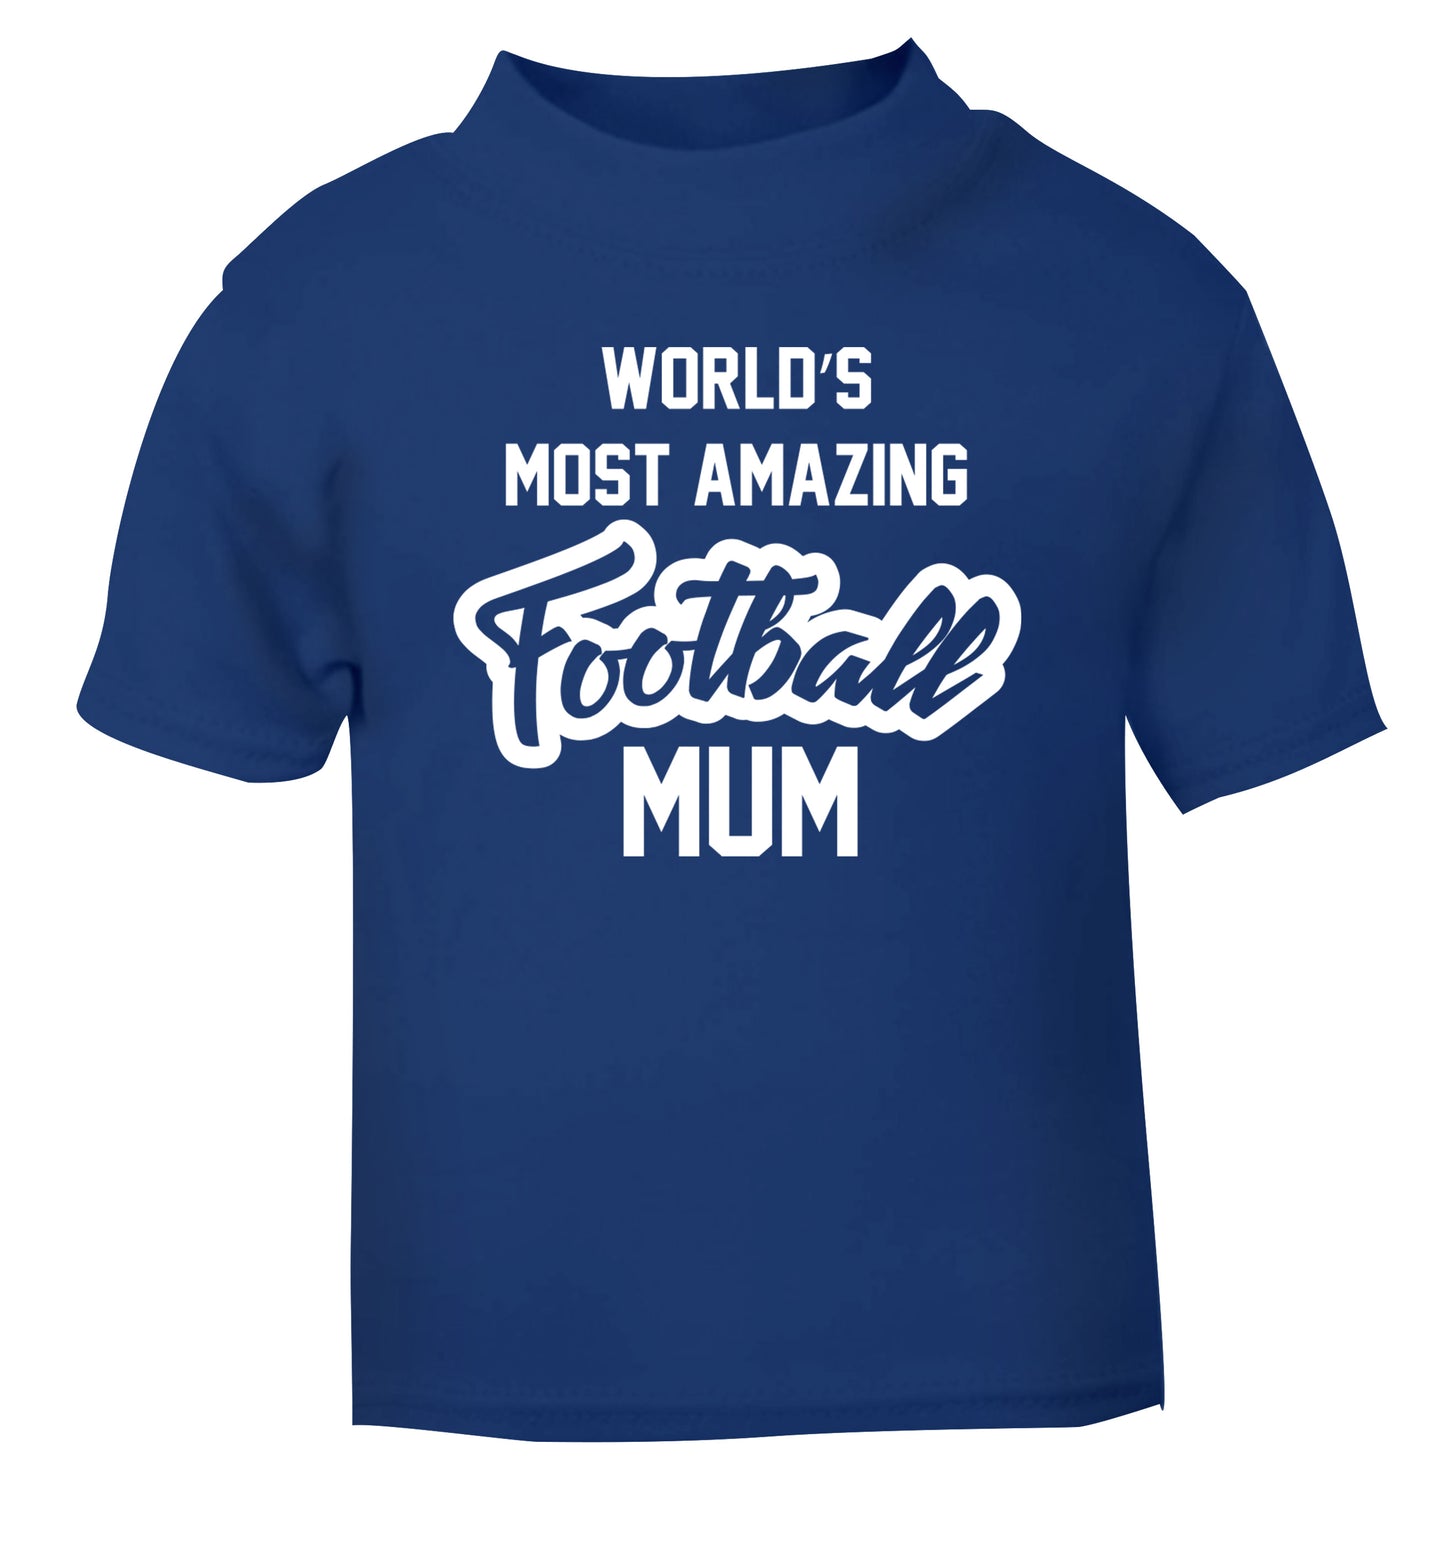 Worlds most amazing football mum blue Baby Toddler Tshirt 2 Years